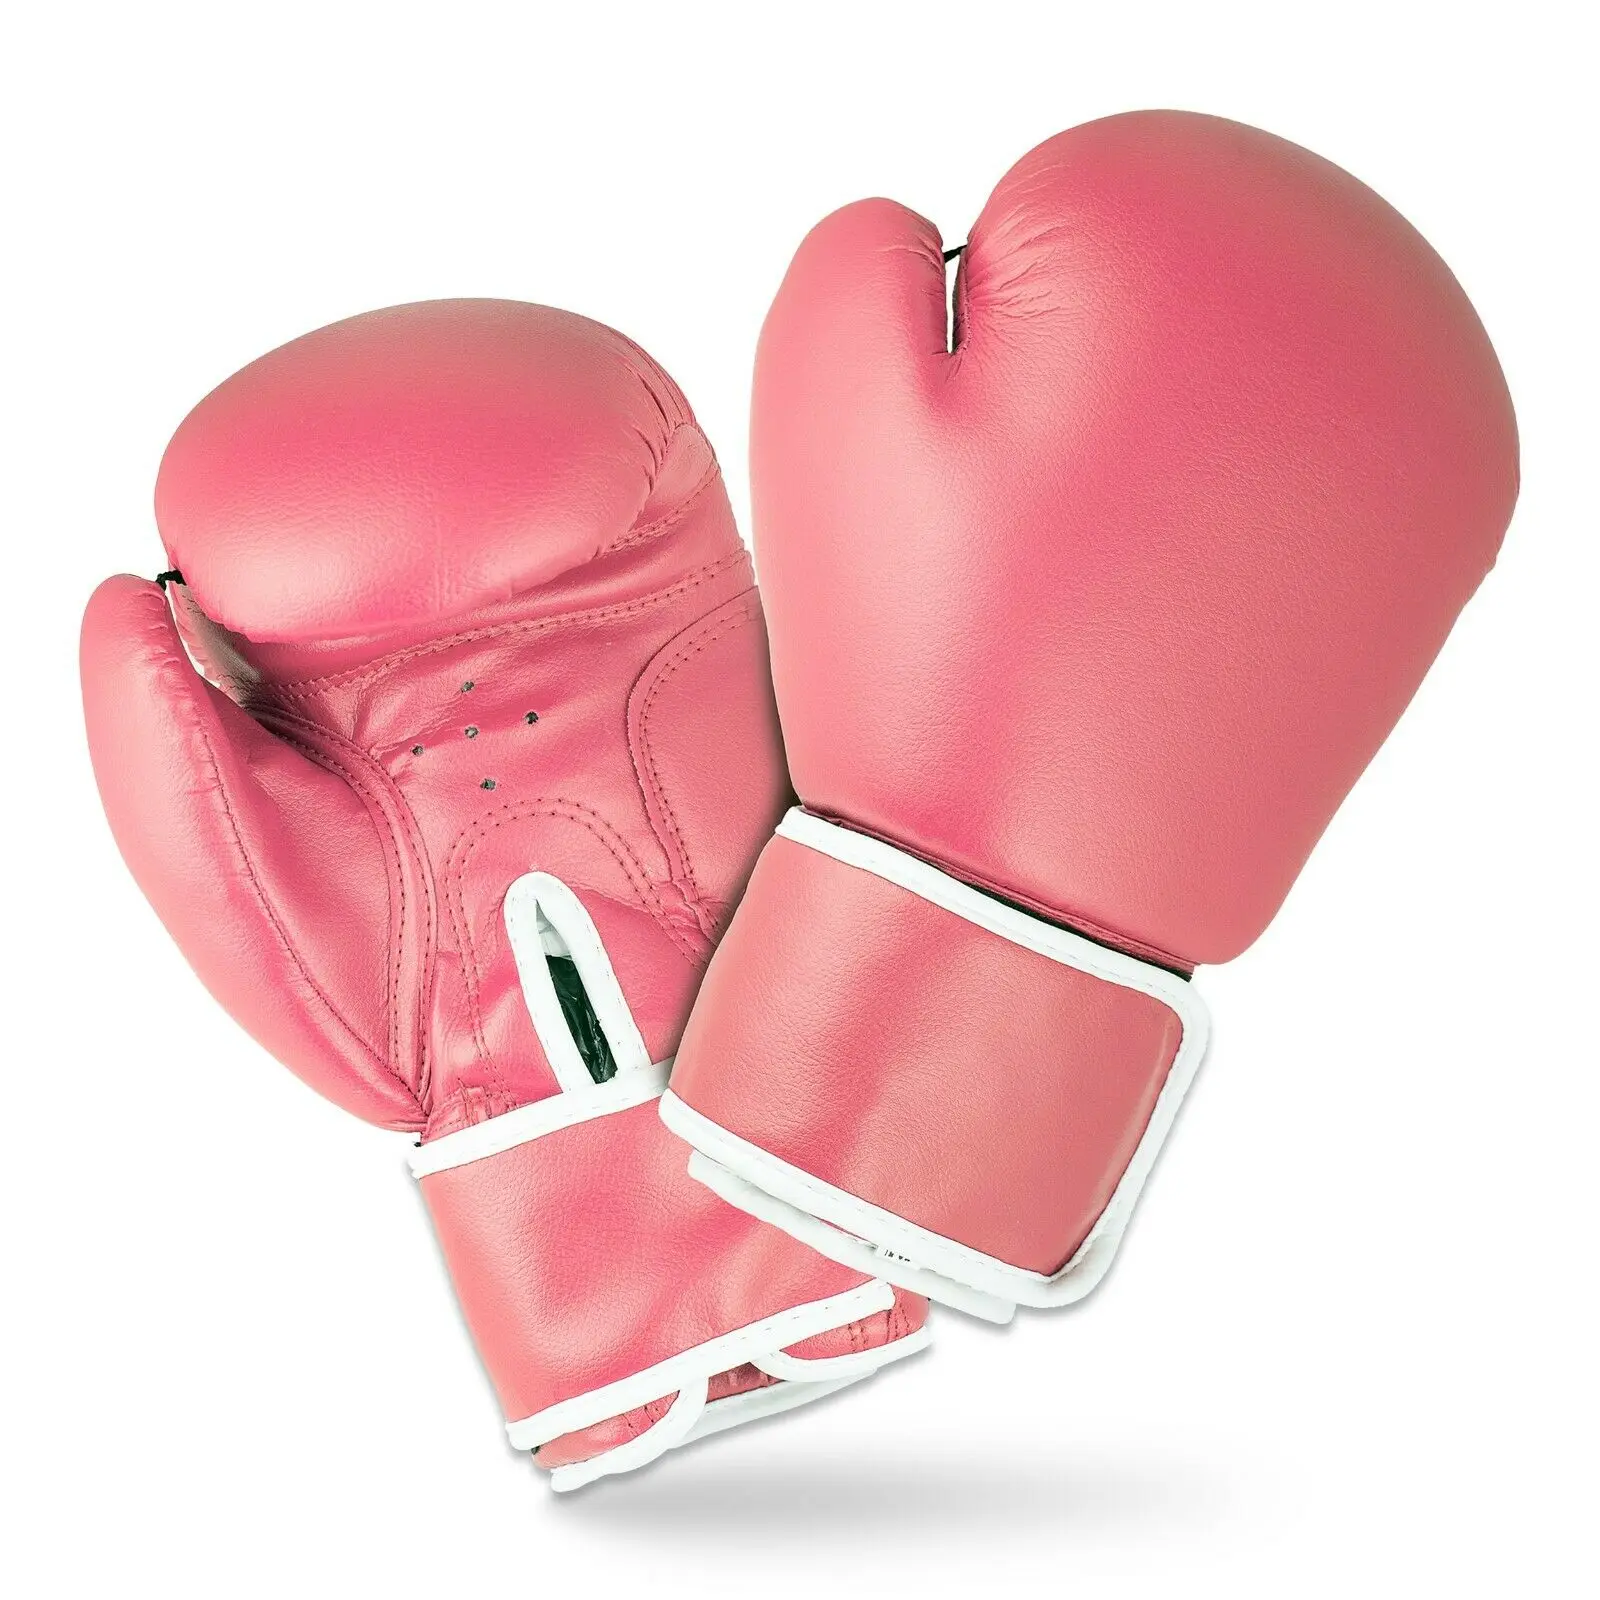 Boxing Punch Mitt Gloves Sparring Karate taekwondo Fight Martial Art Training 